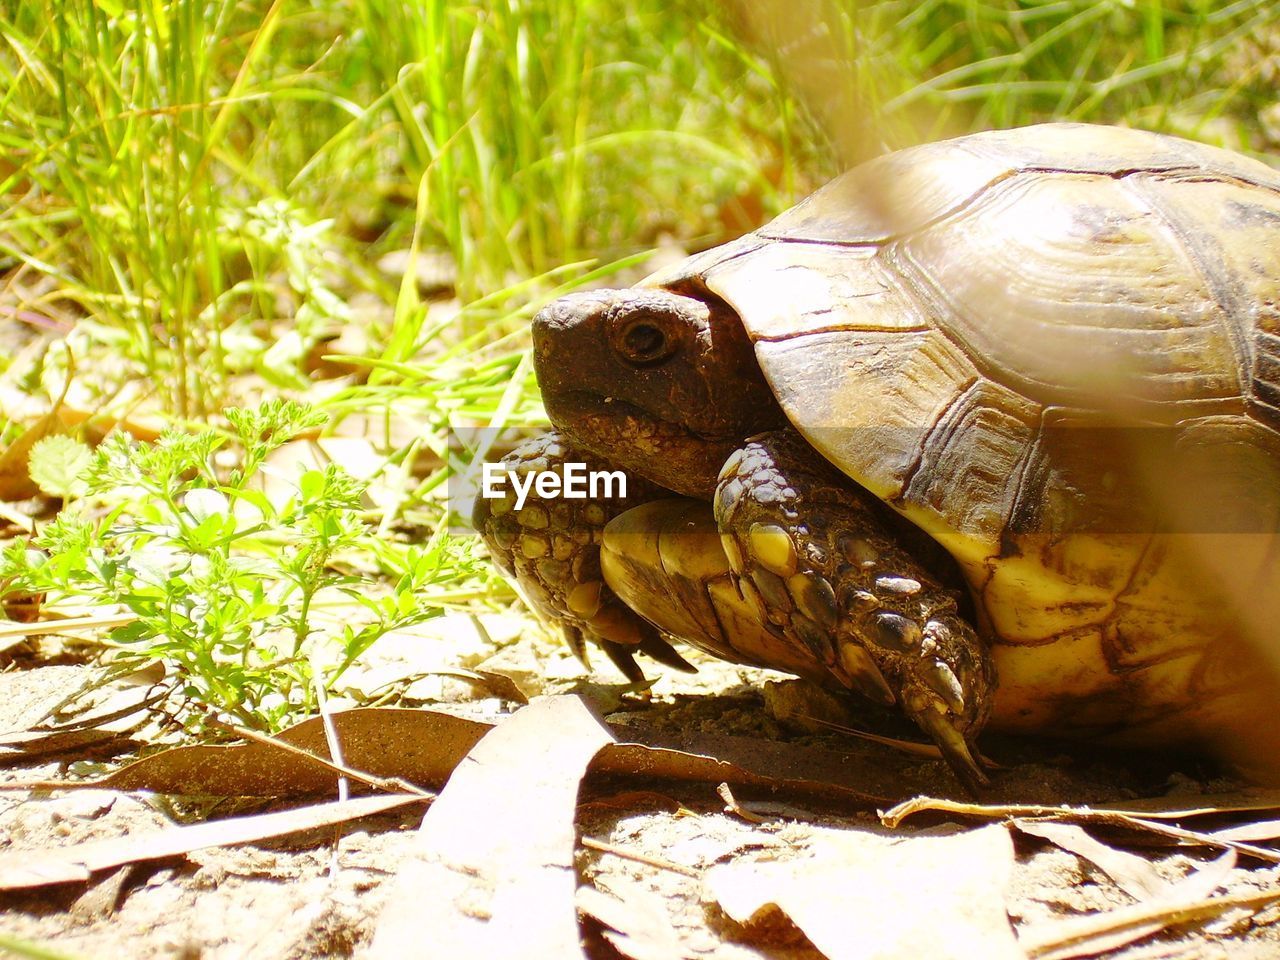 A close up of an israeli tortoise